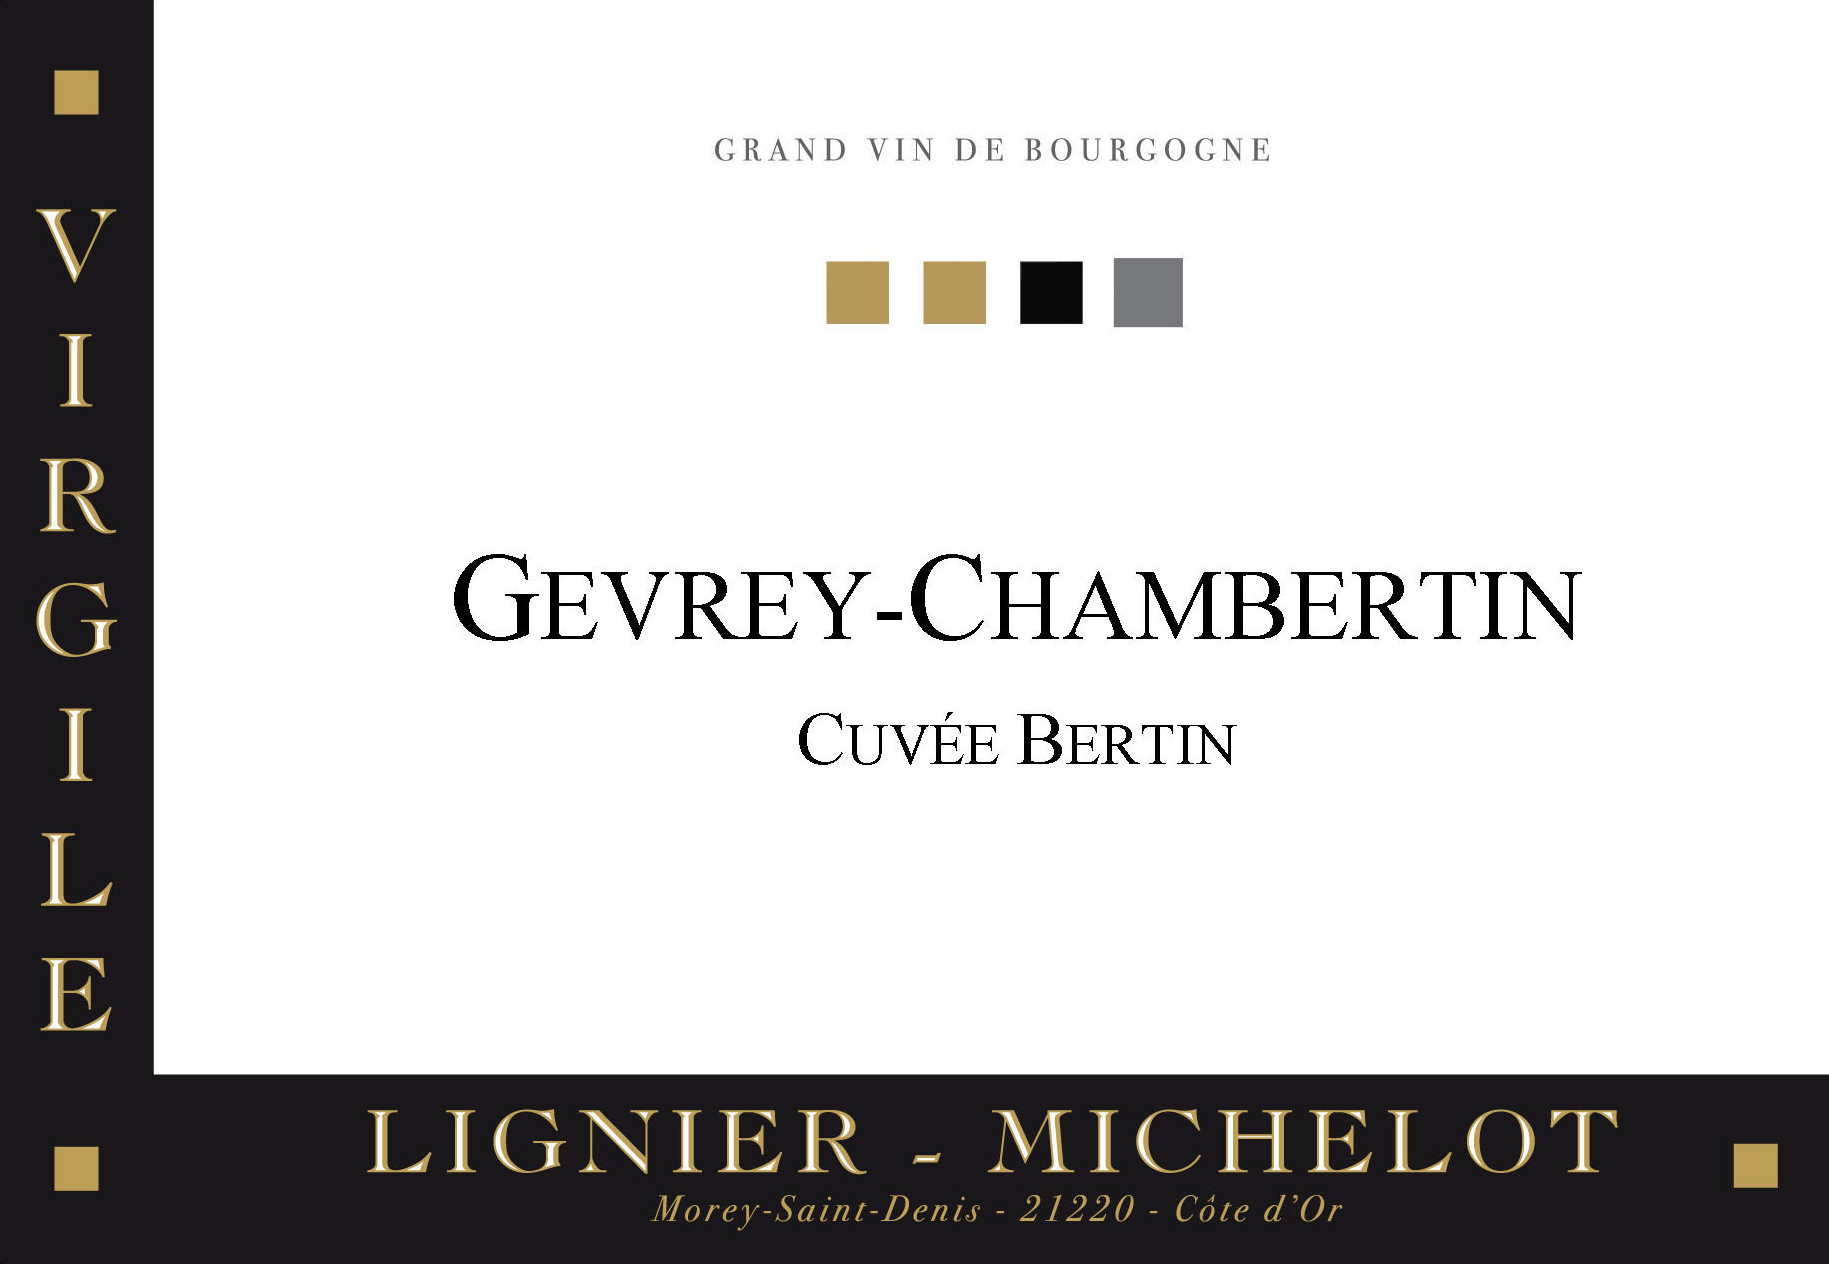 2017 Domaine Lignier-Michelot Gevrey Chambertin Cuvee Bertin - click image for full description